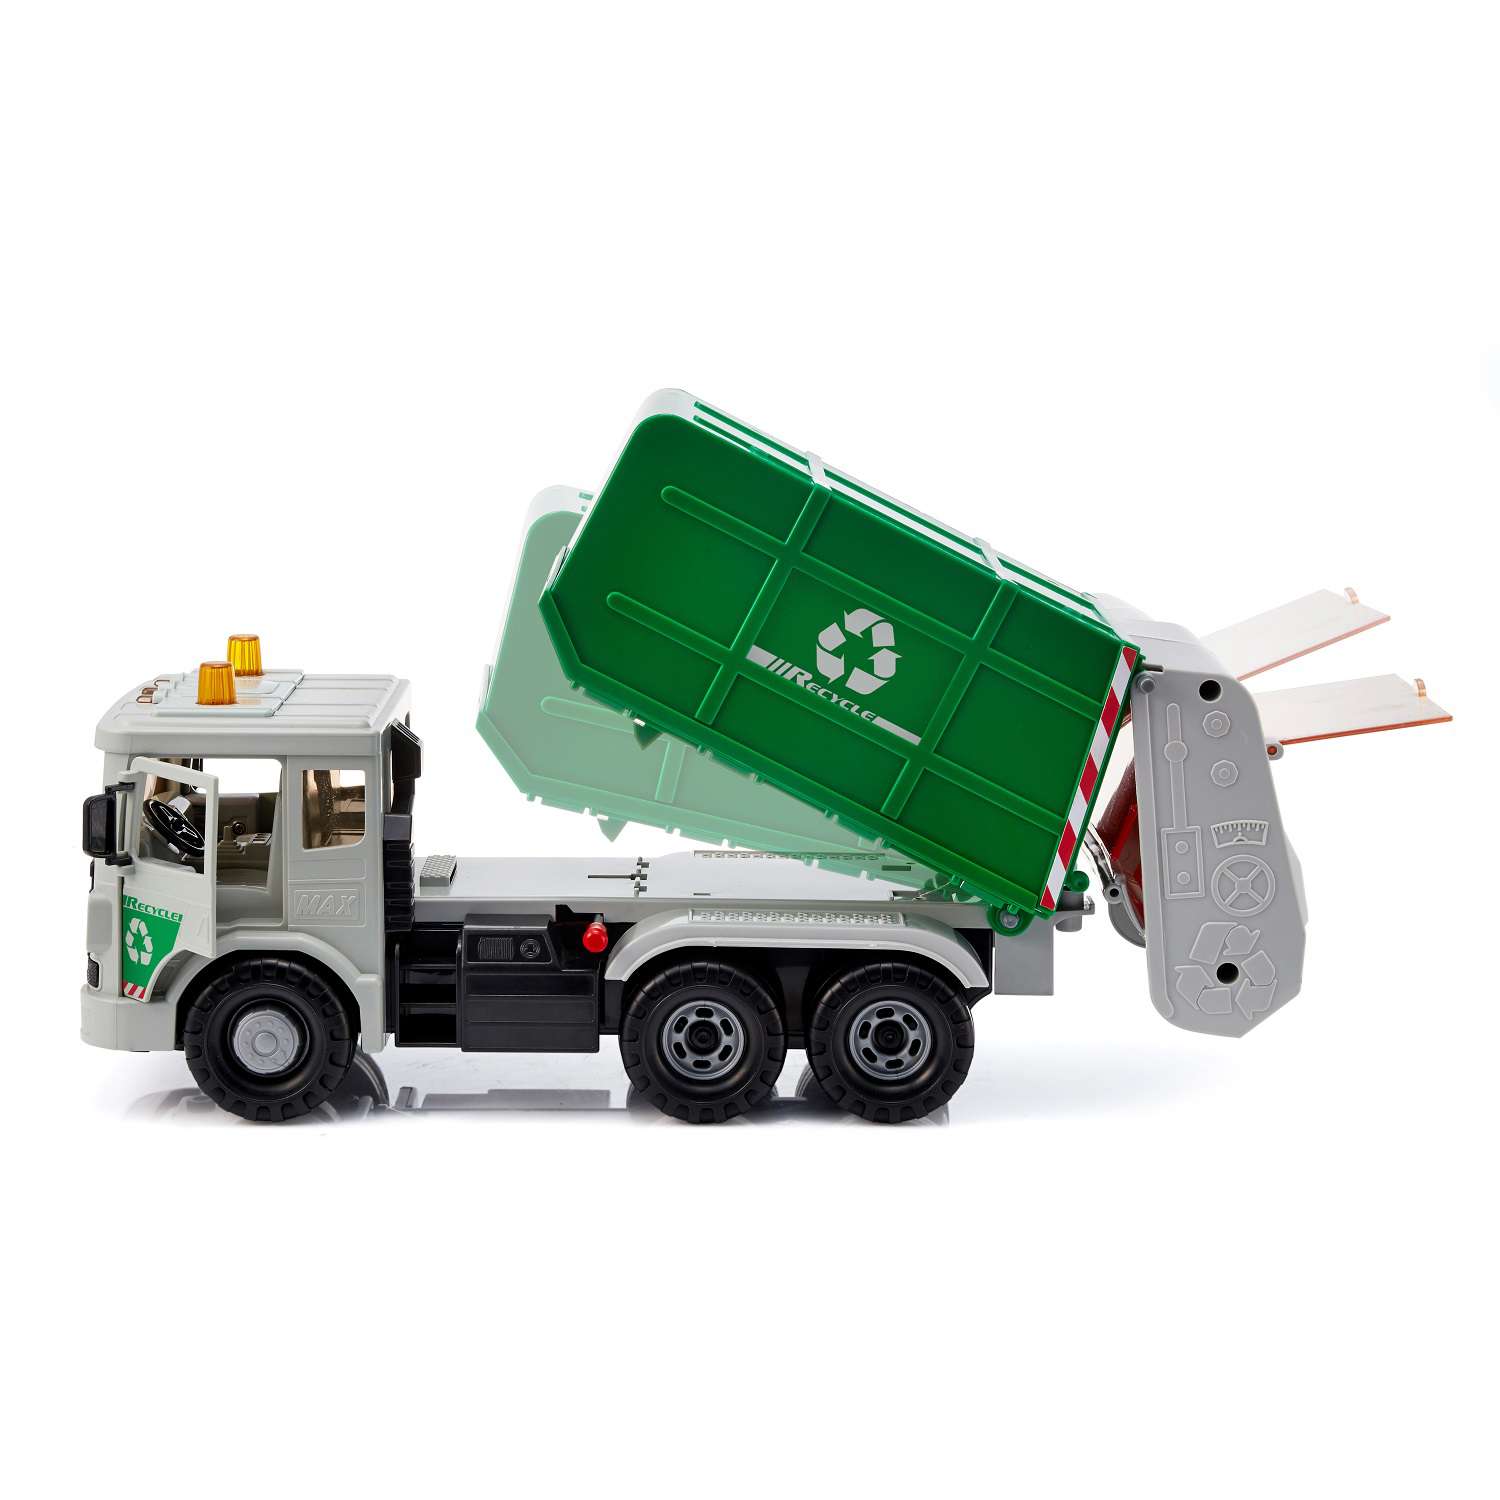 Дасунг машинка инерционная мусоровоз Daesung. Дасунг игрушка мусоровоз синий Daesung. Зеленый ГАЗ 3309 мусоровоз. Мусоровоз зеленый игрушка.